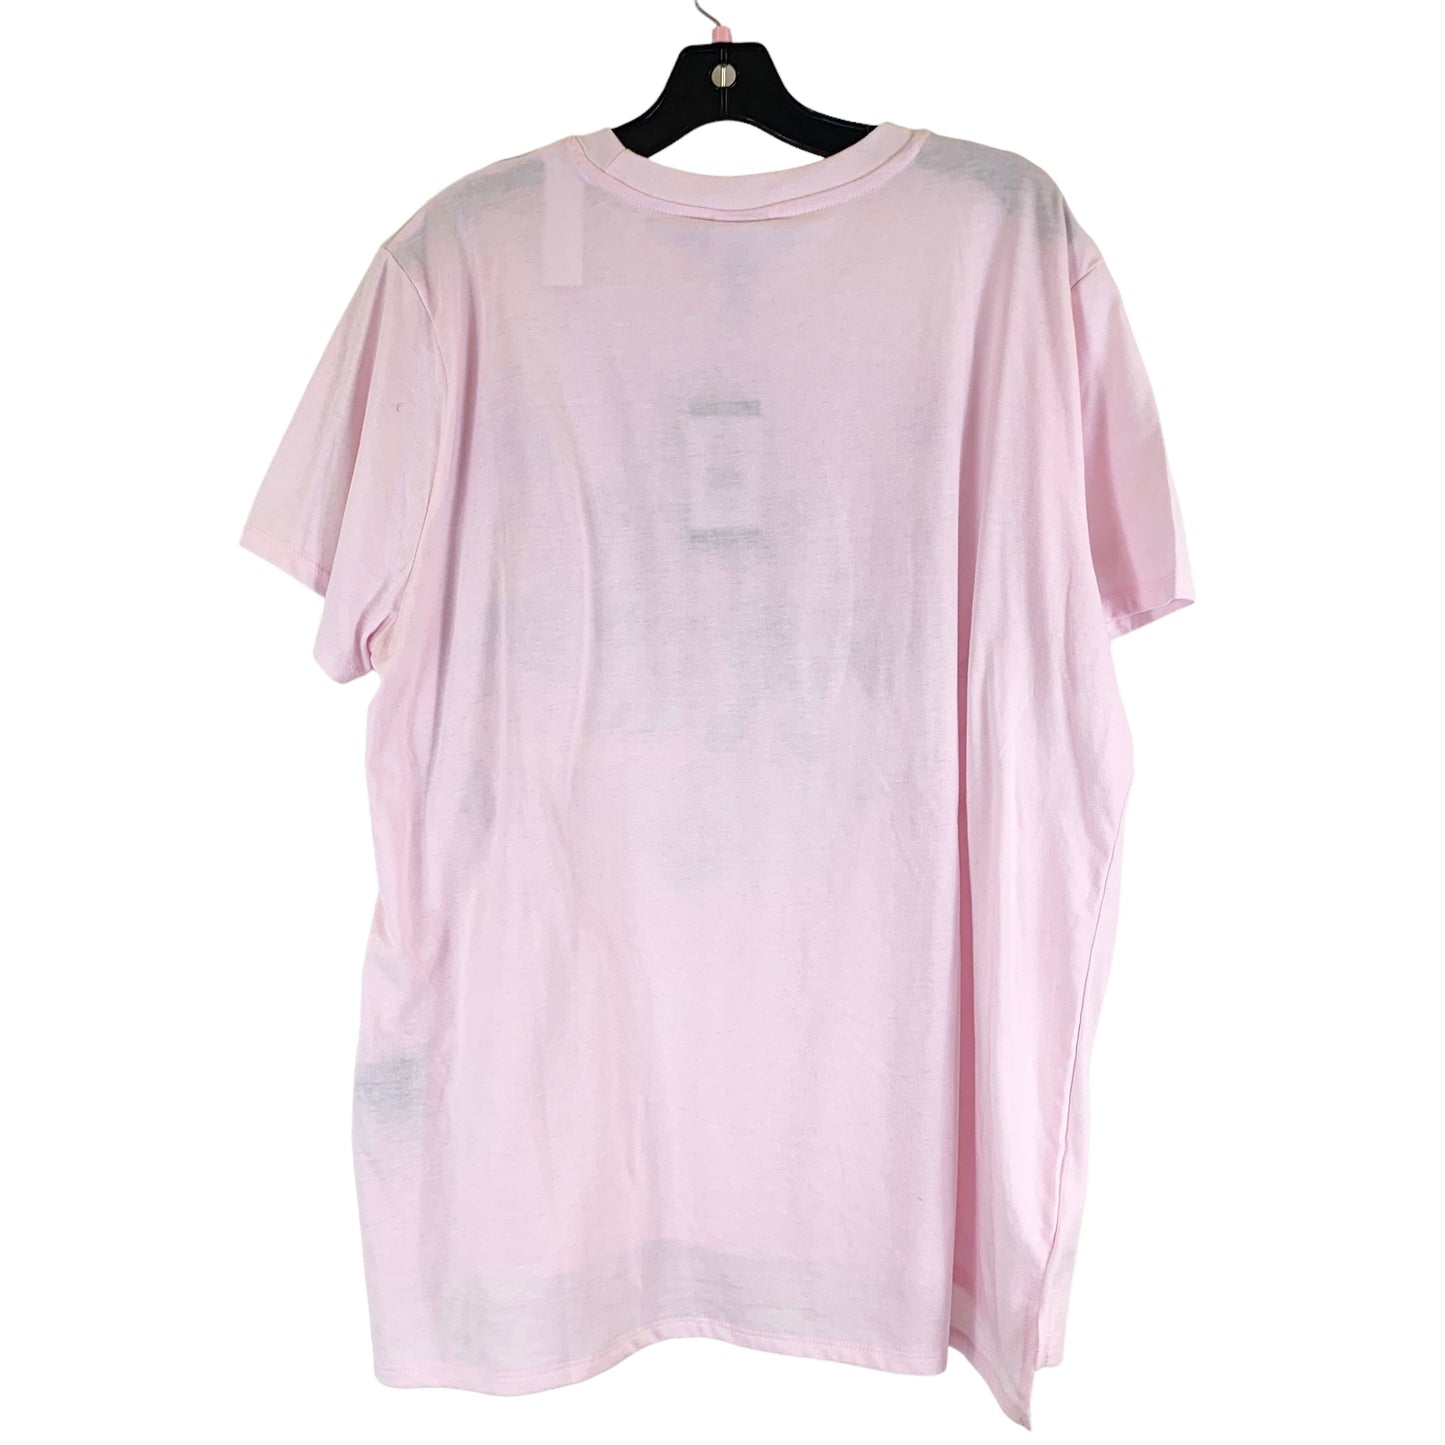 Pink Top Short Sleeve Disney Store, Size Xxl